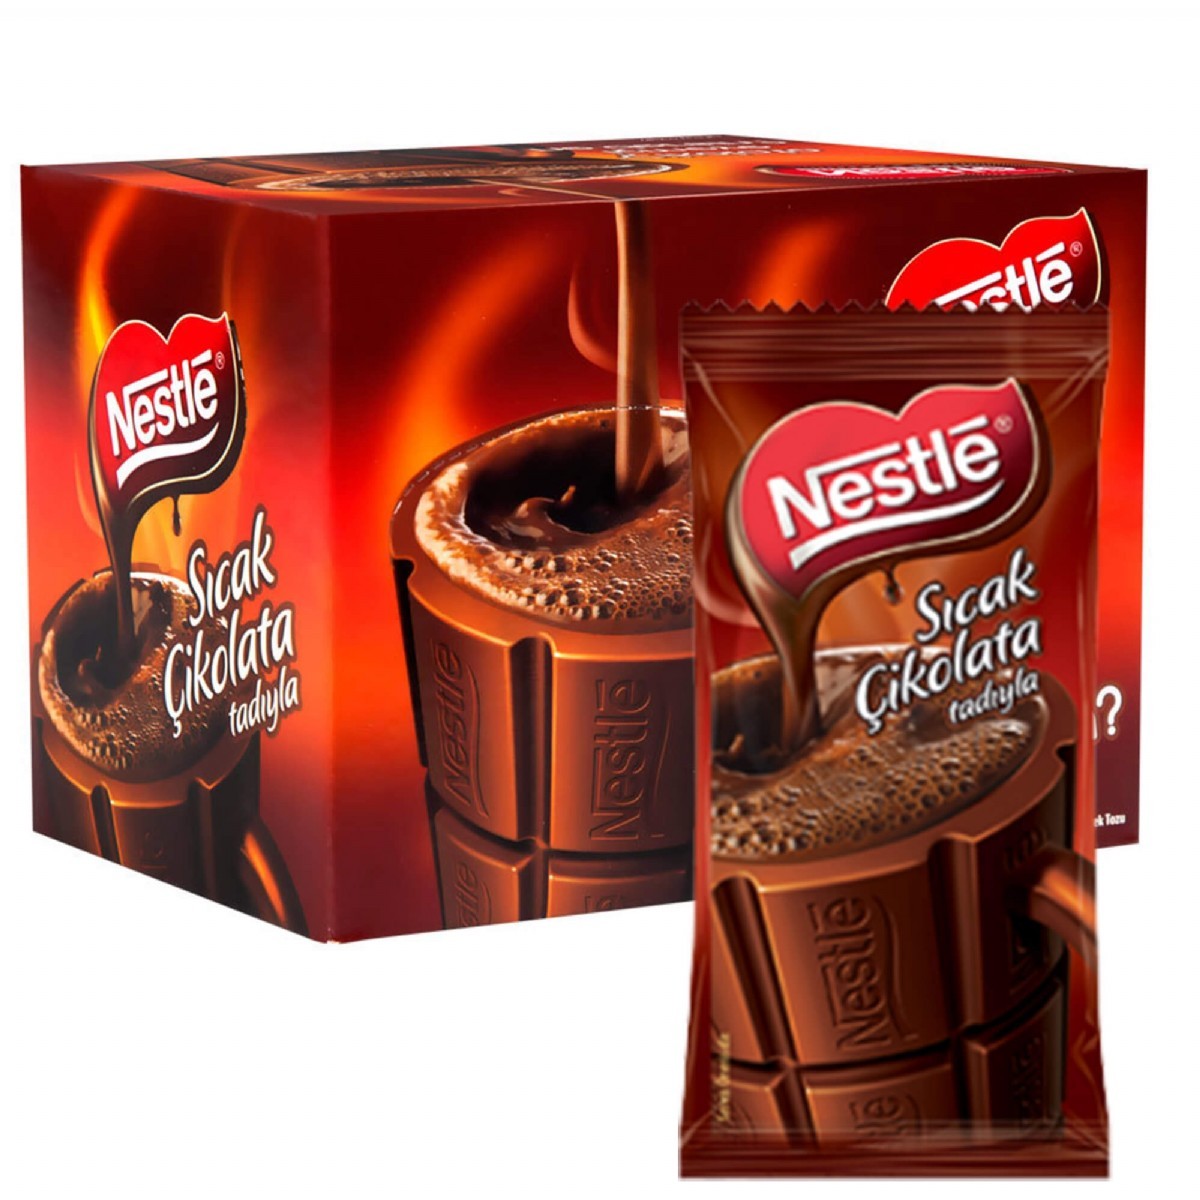 SICAK CIKOLATASAHLEP Nestle Sıcak Çikolata 18,5 Gr 8690632702650